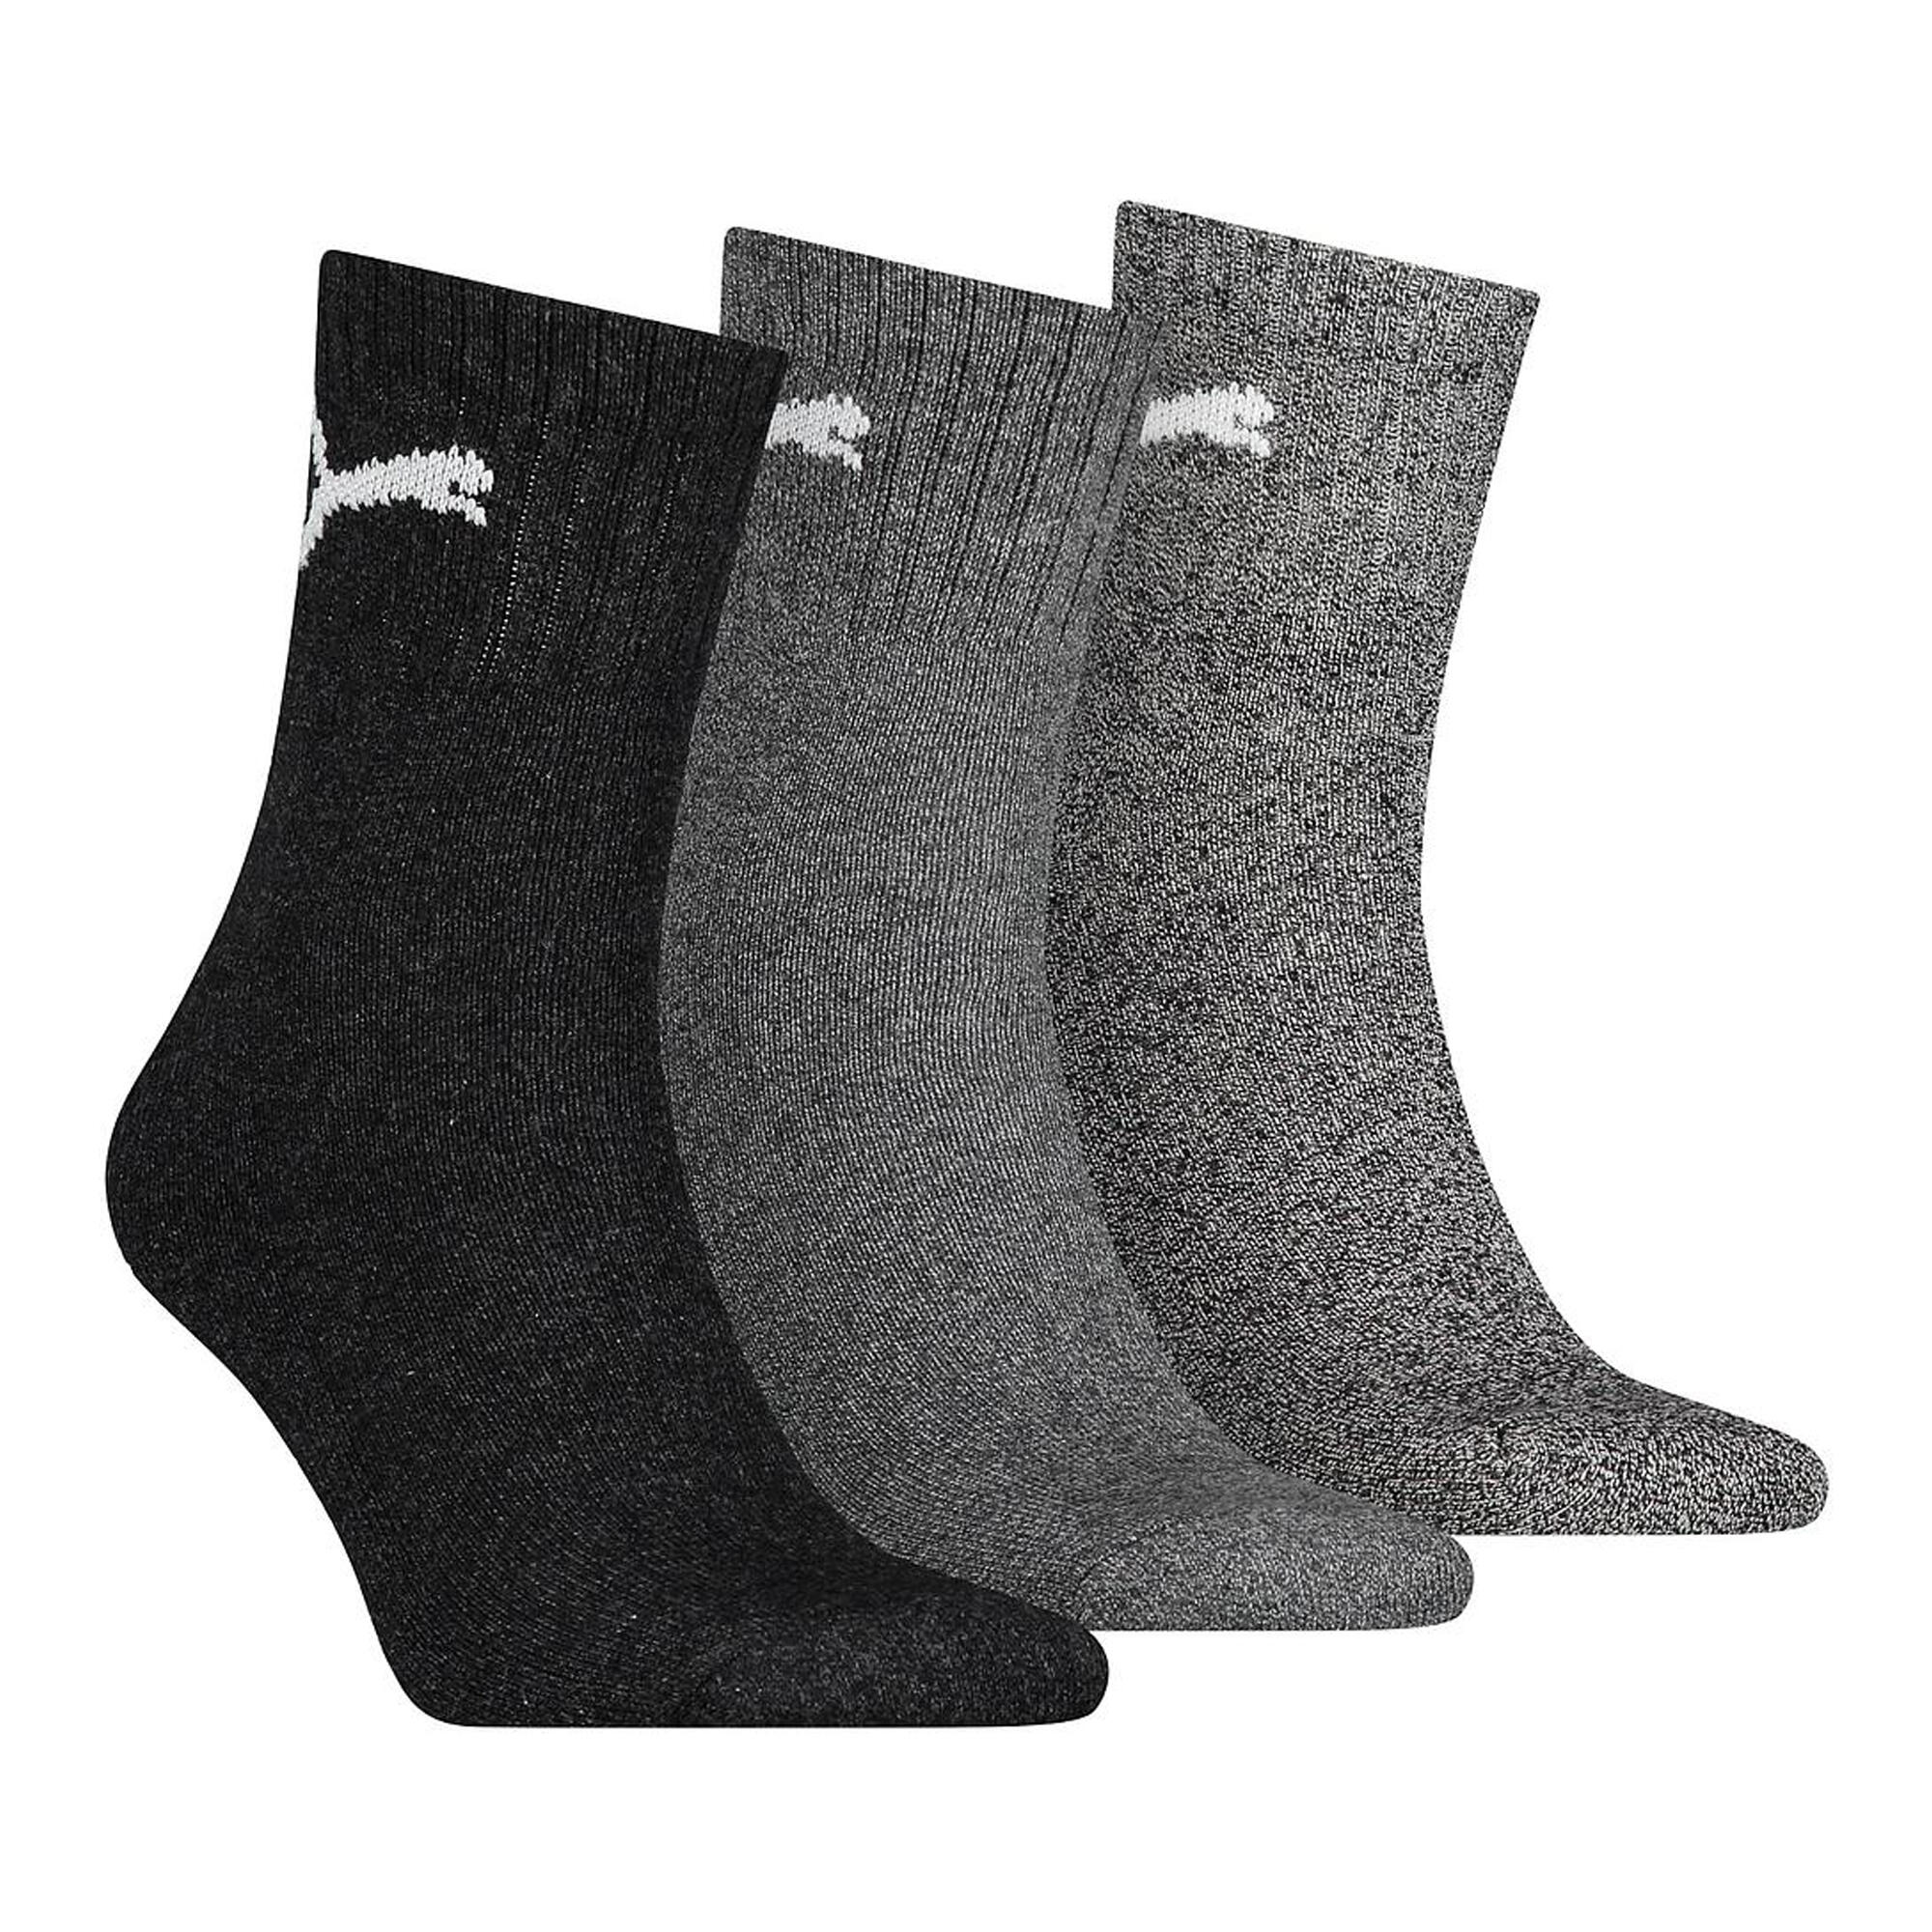 Unisex Adult Crew Socks (Pack of 3) (Grey) 3/3